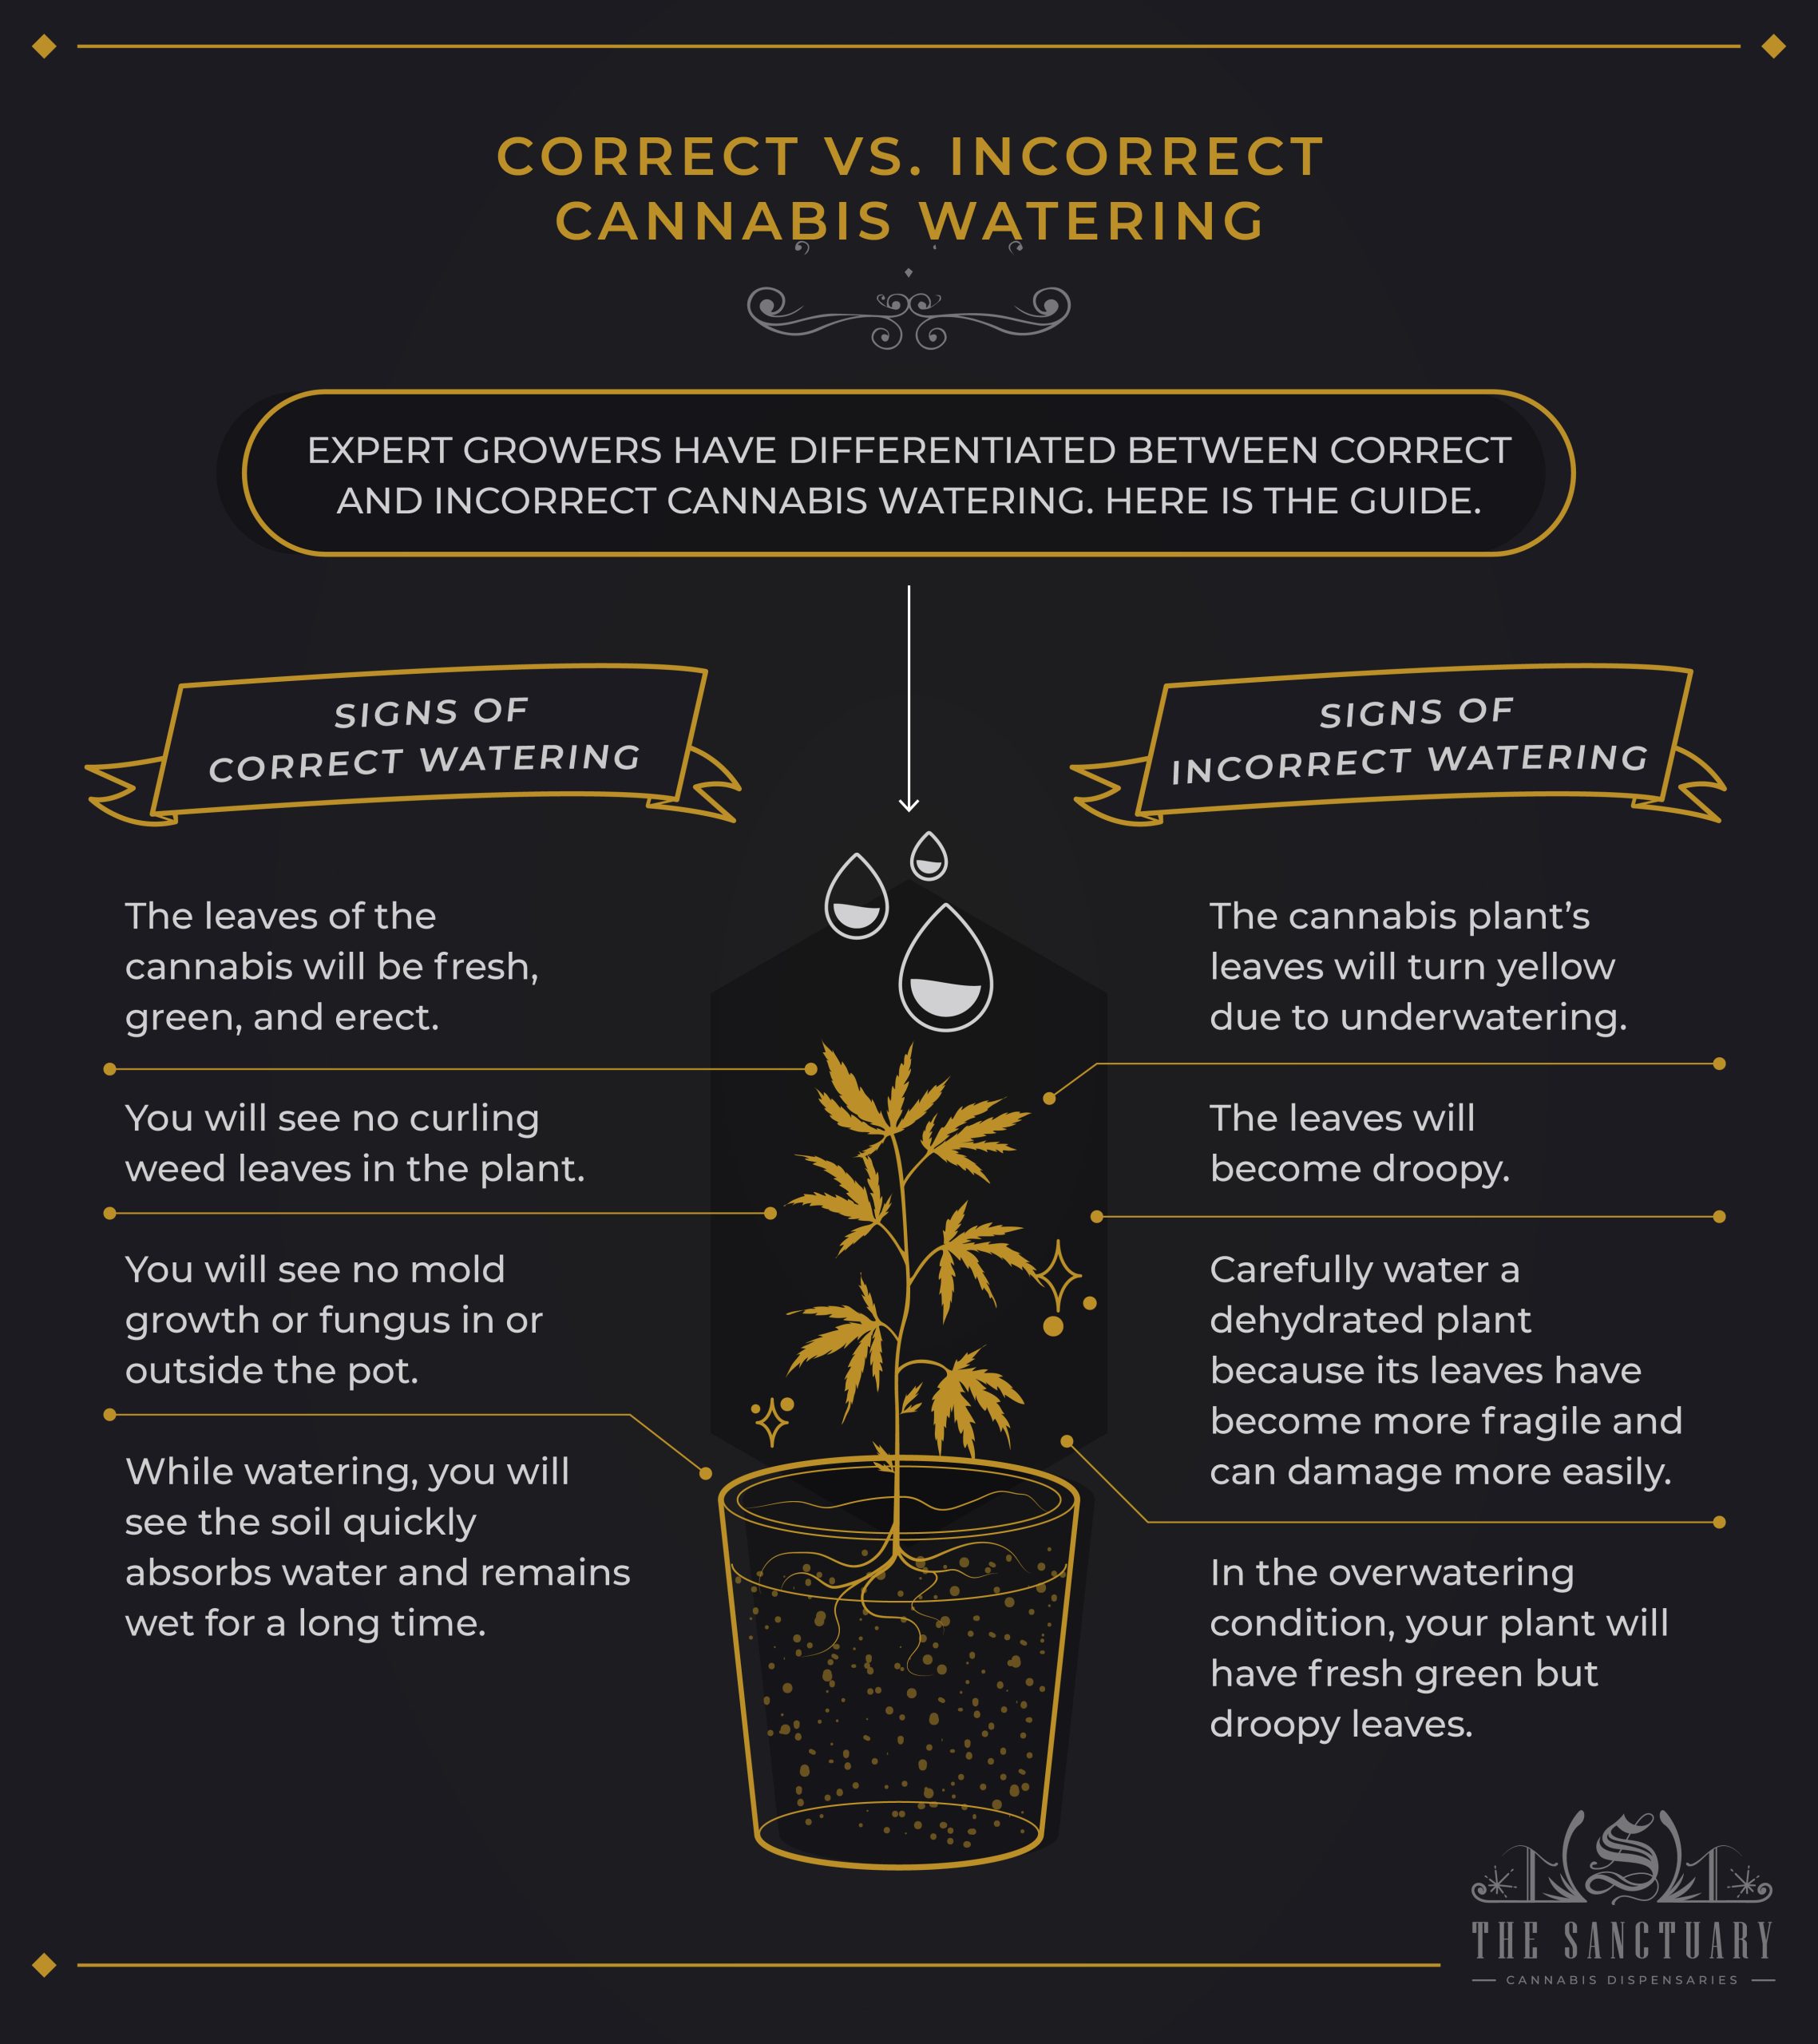 Correct vs. Incorrect Cannabis Watering